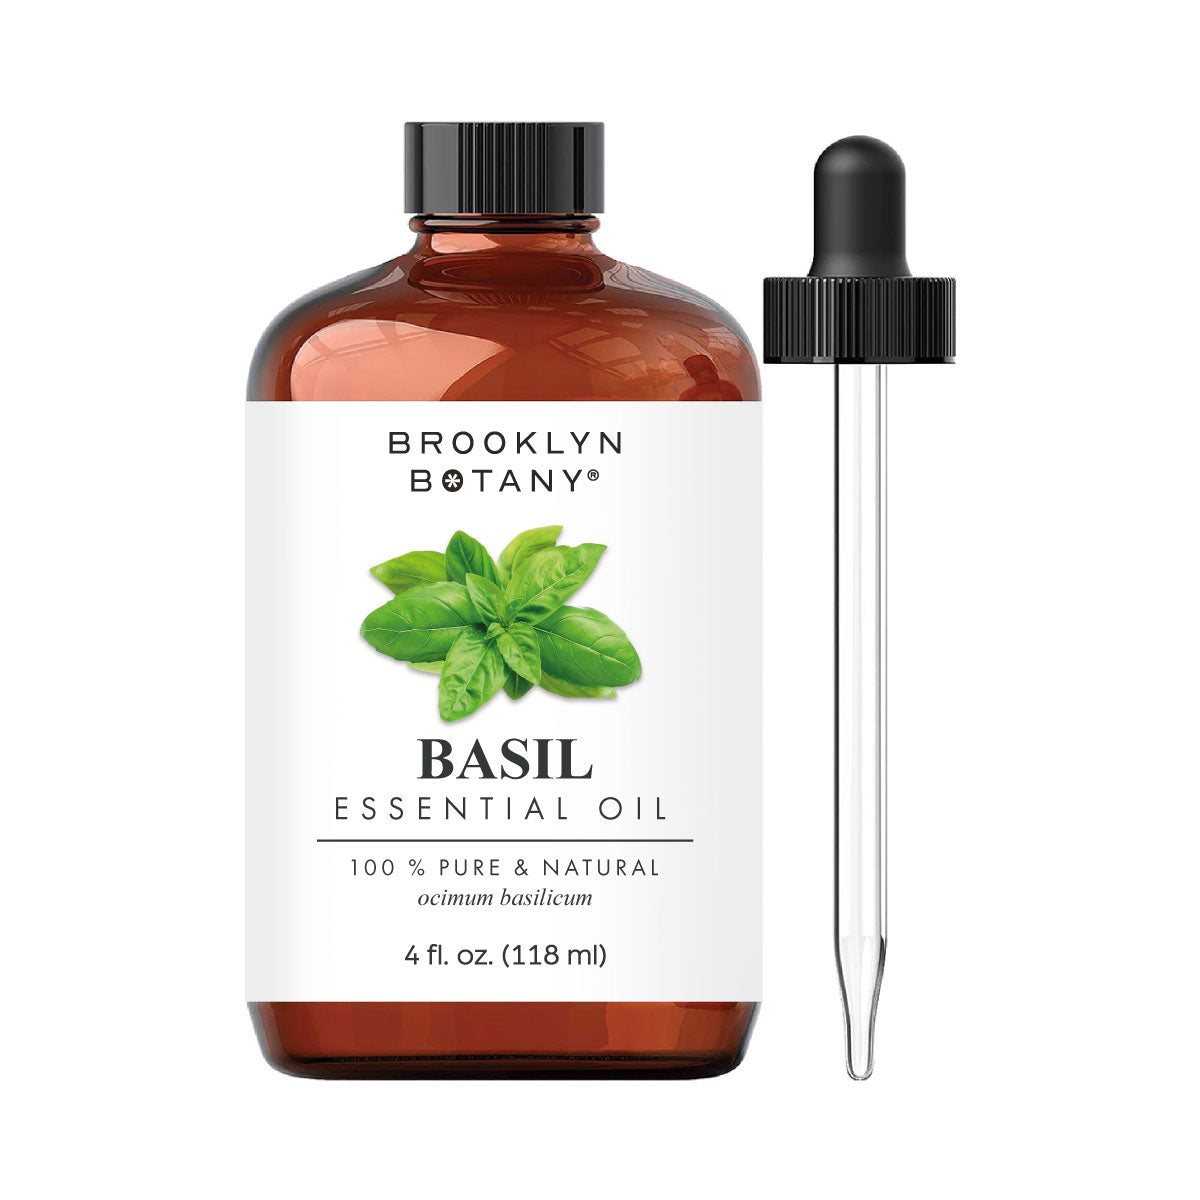 SHOPIFY_-BB-Basil-Essential-Oil-Main-Image-1.jpg